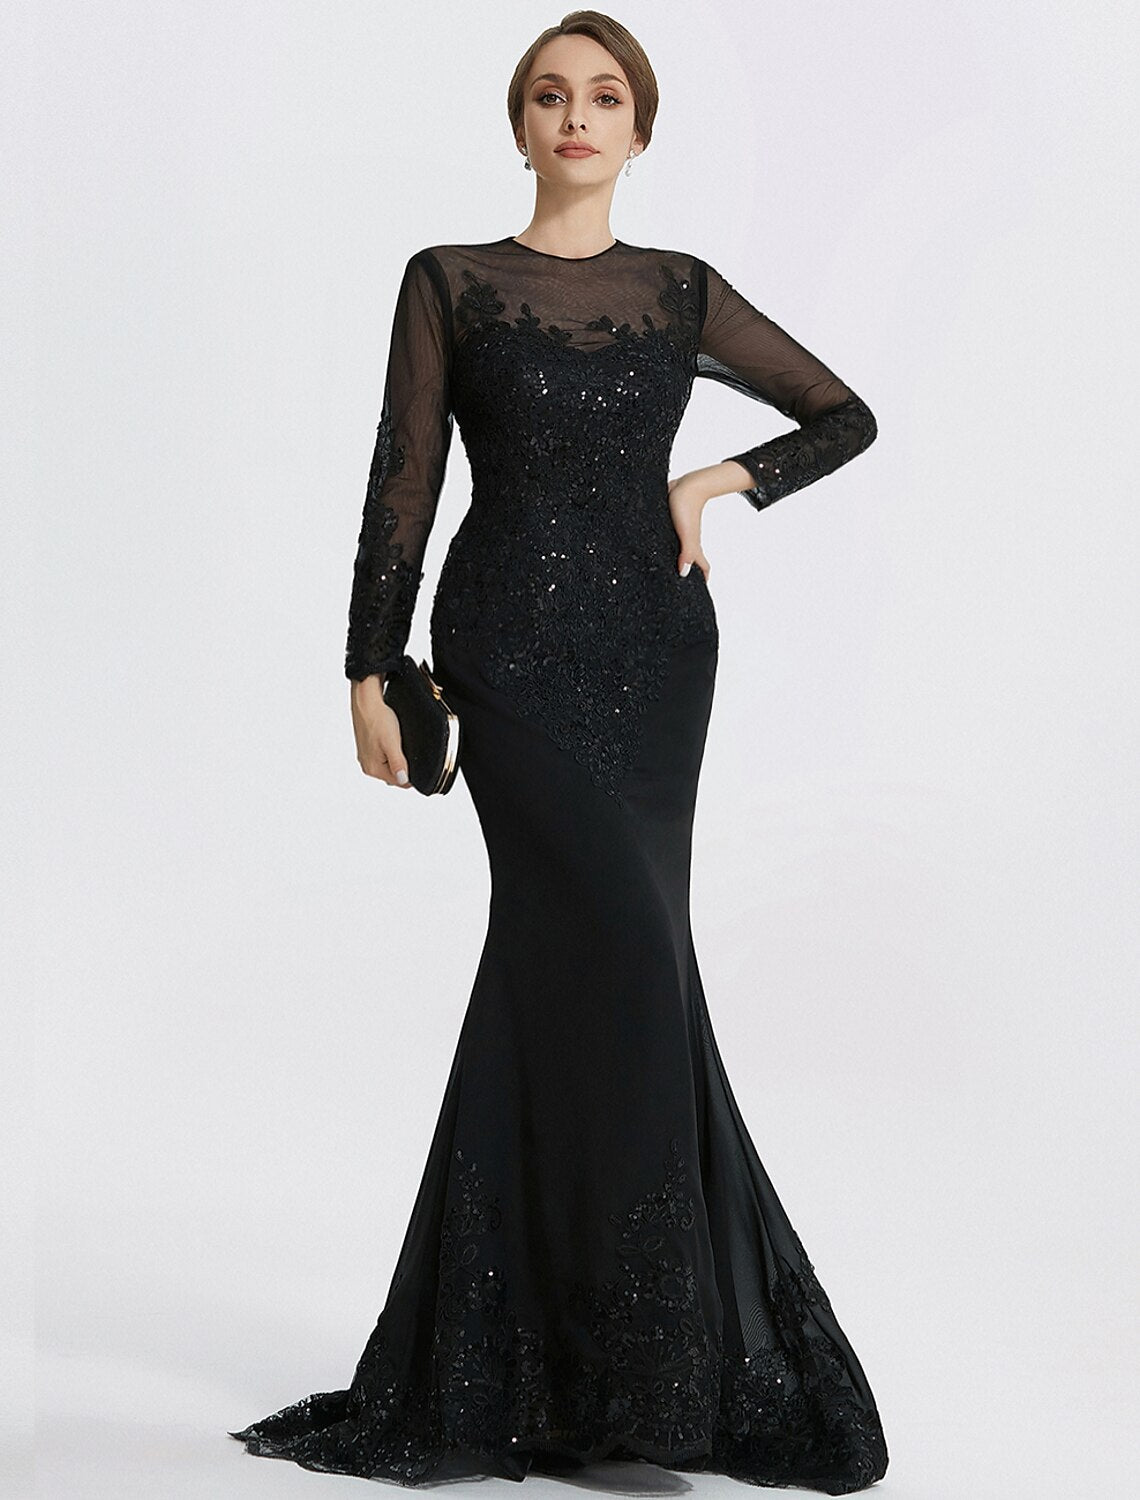 Mermaid / Trumpet Sheath / Column Evening Gown Elegant Dress Formal Floor Length Long Sleeve Jewel Neck Lace with Appliques